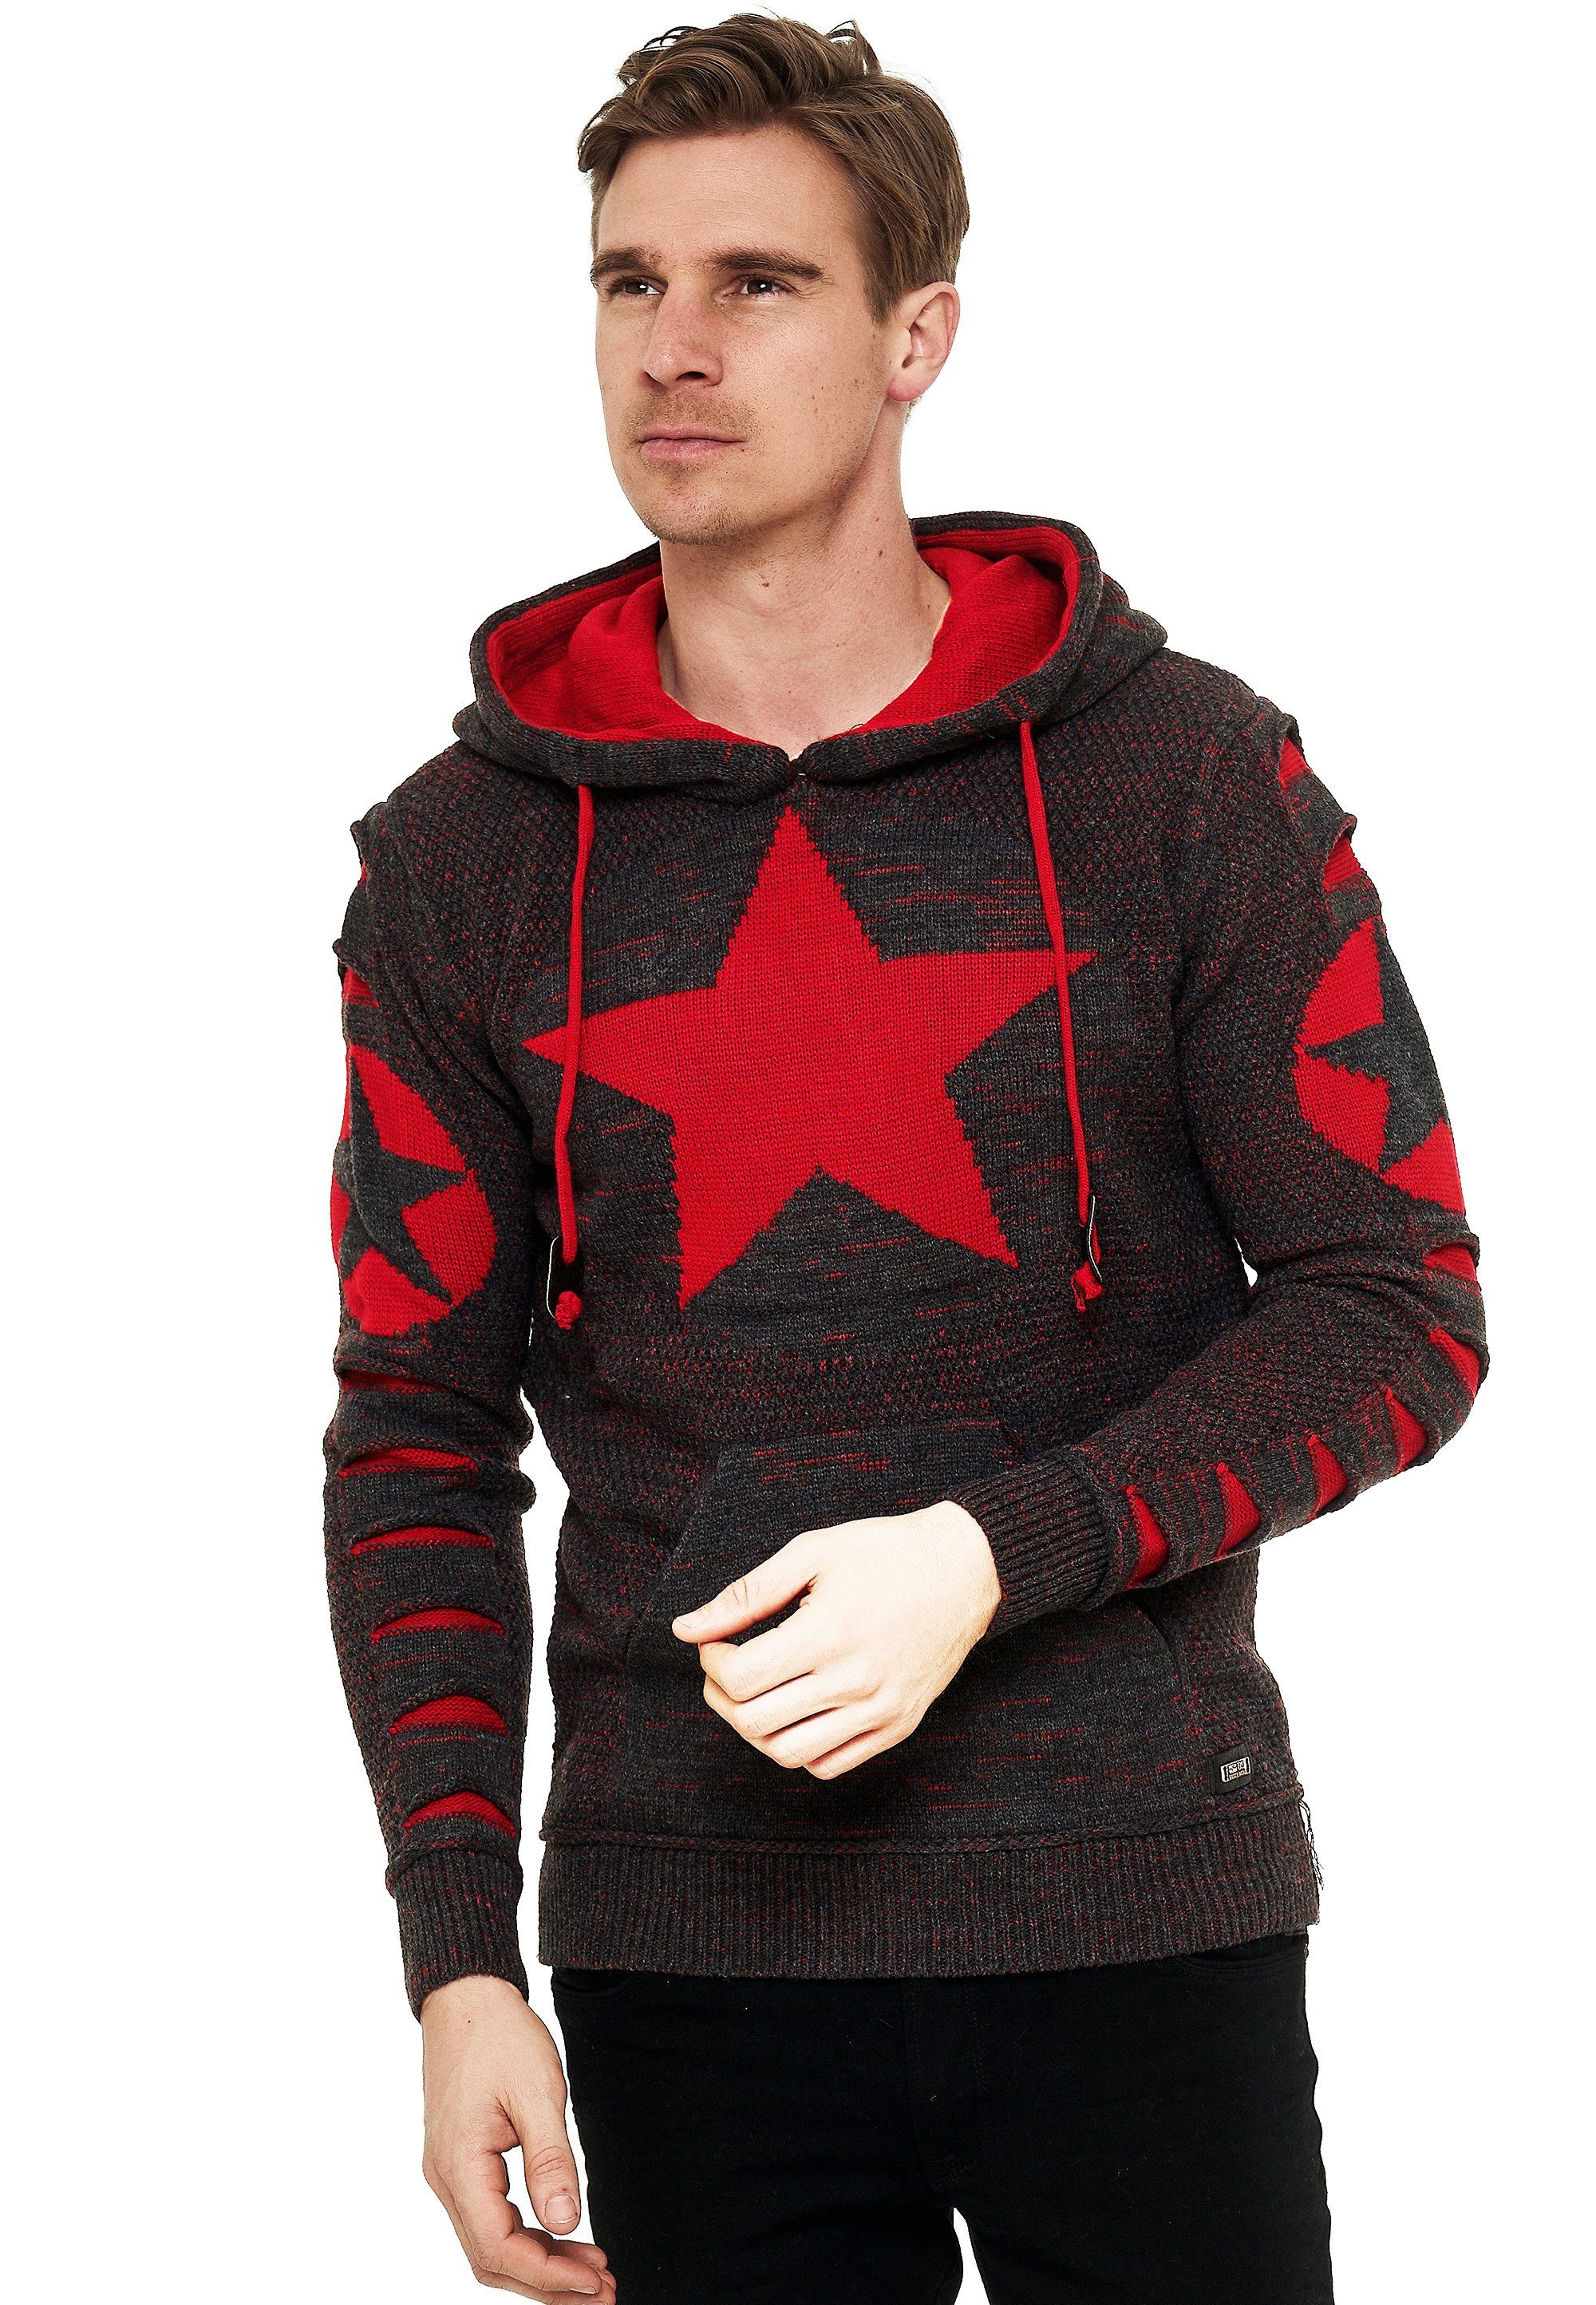 Rusty Neal Kapuzensweatshirt mit großem Stern-Design anthrazit-rot